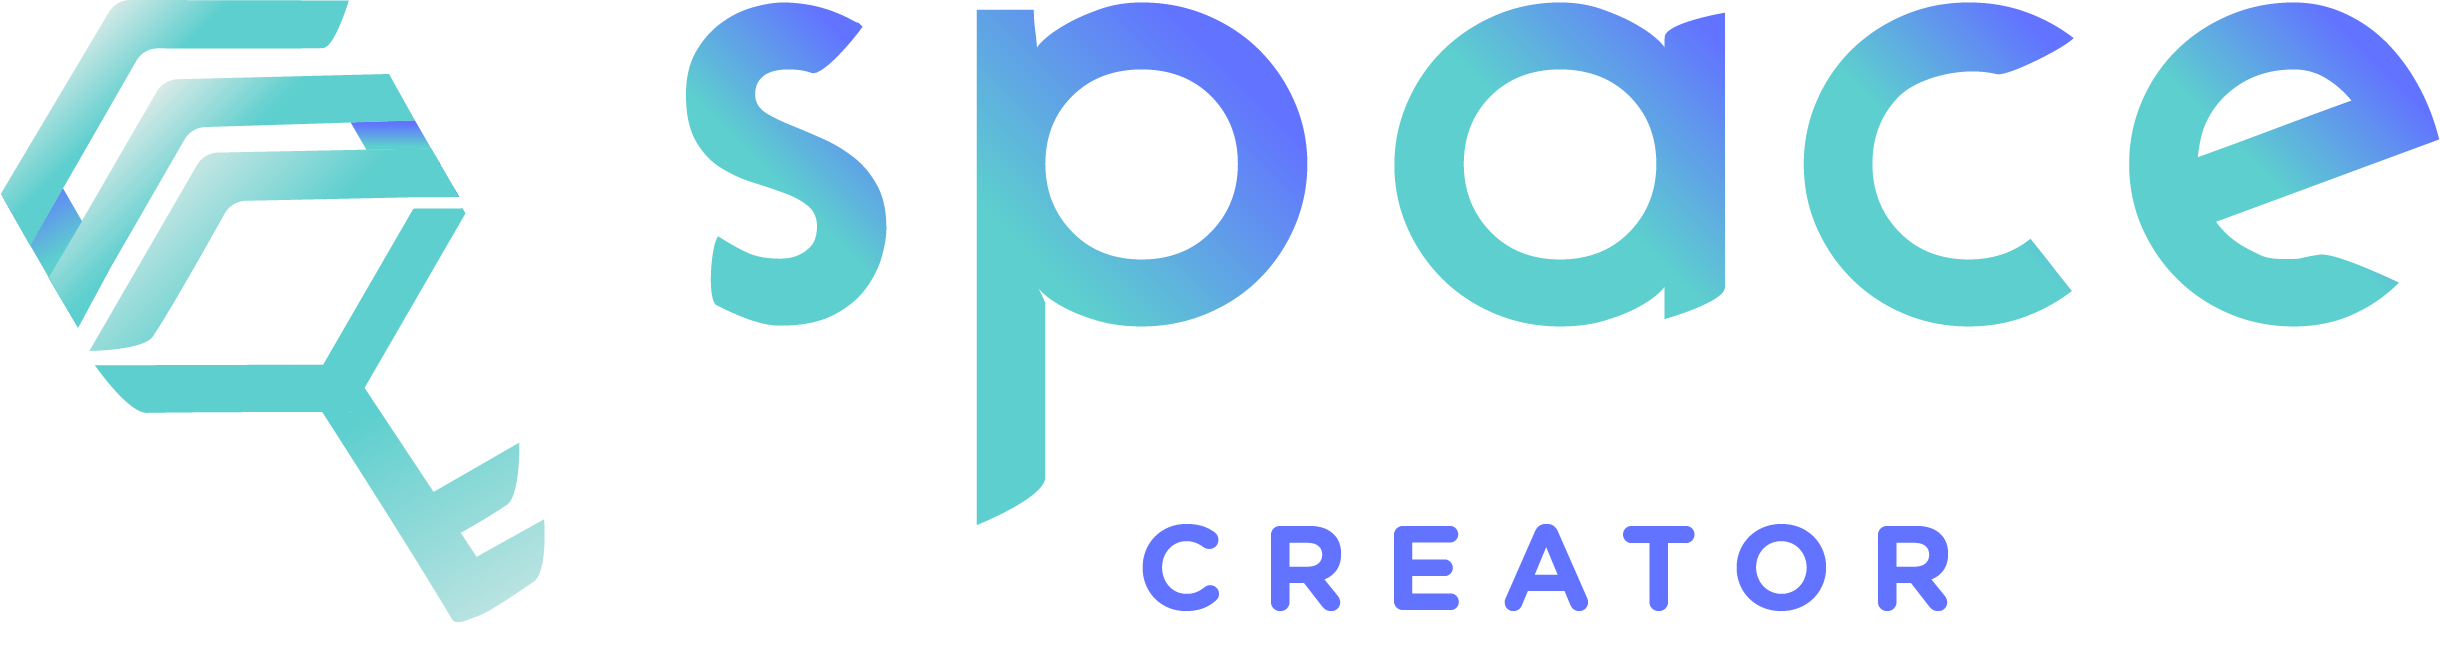 Space Creator Logo - Horizontal